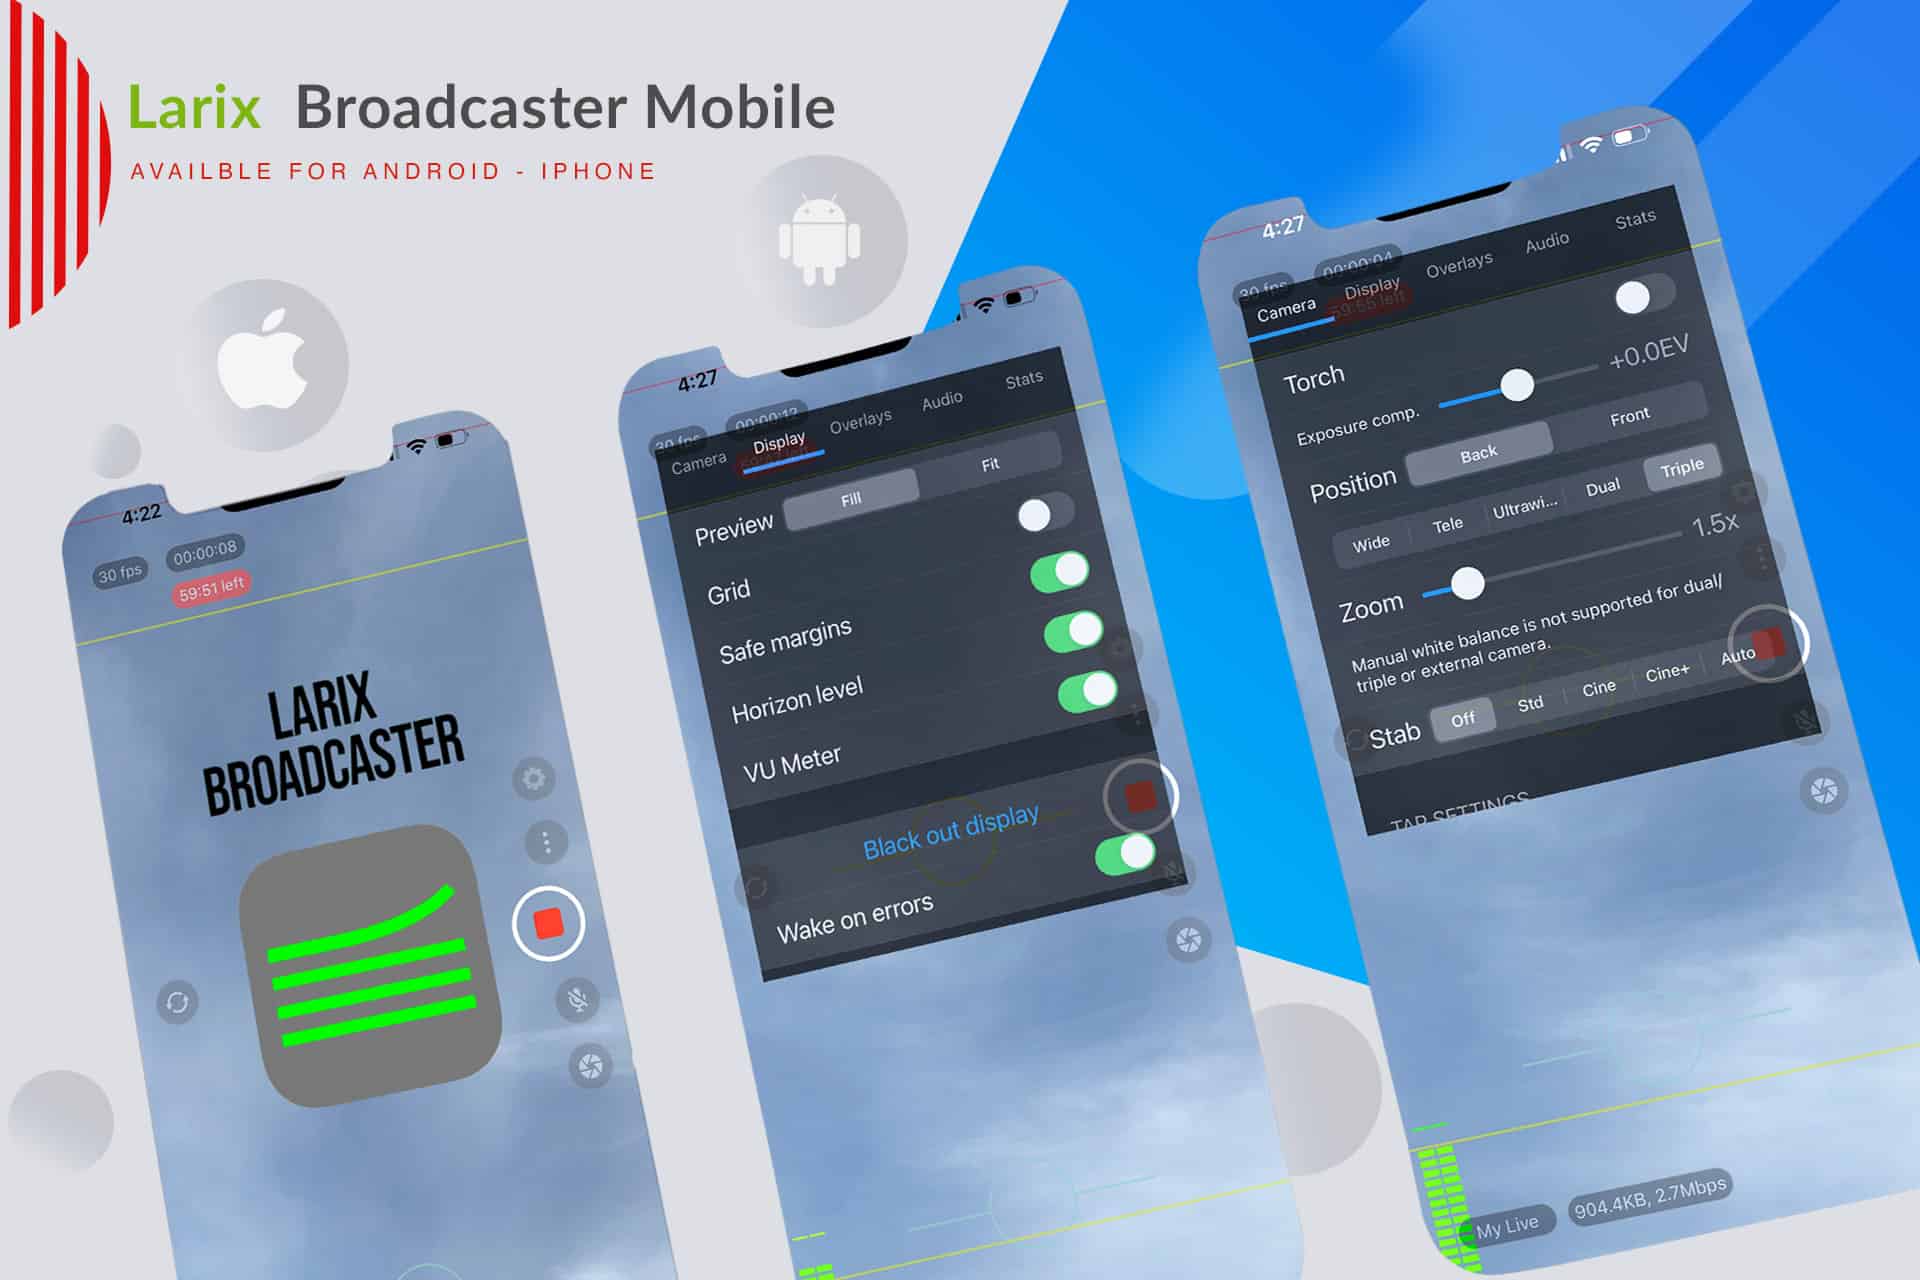 Larix Broadcaster Mobile